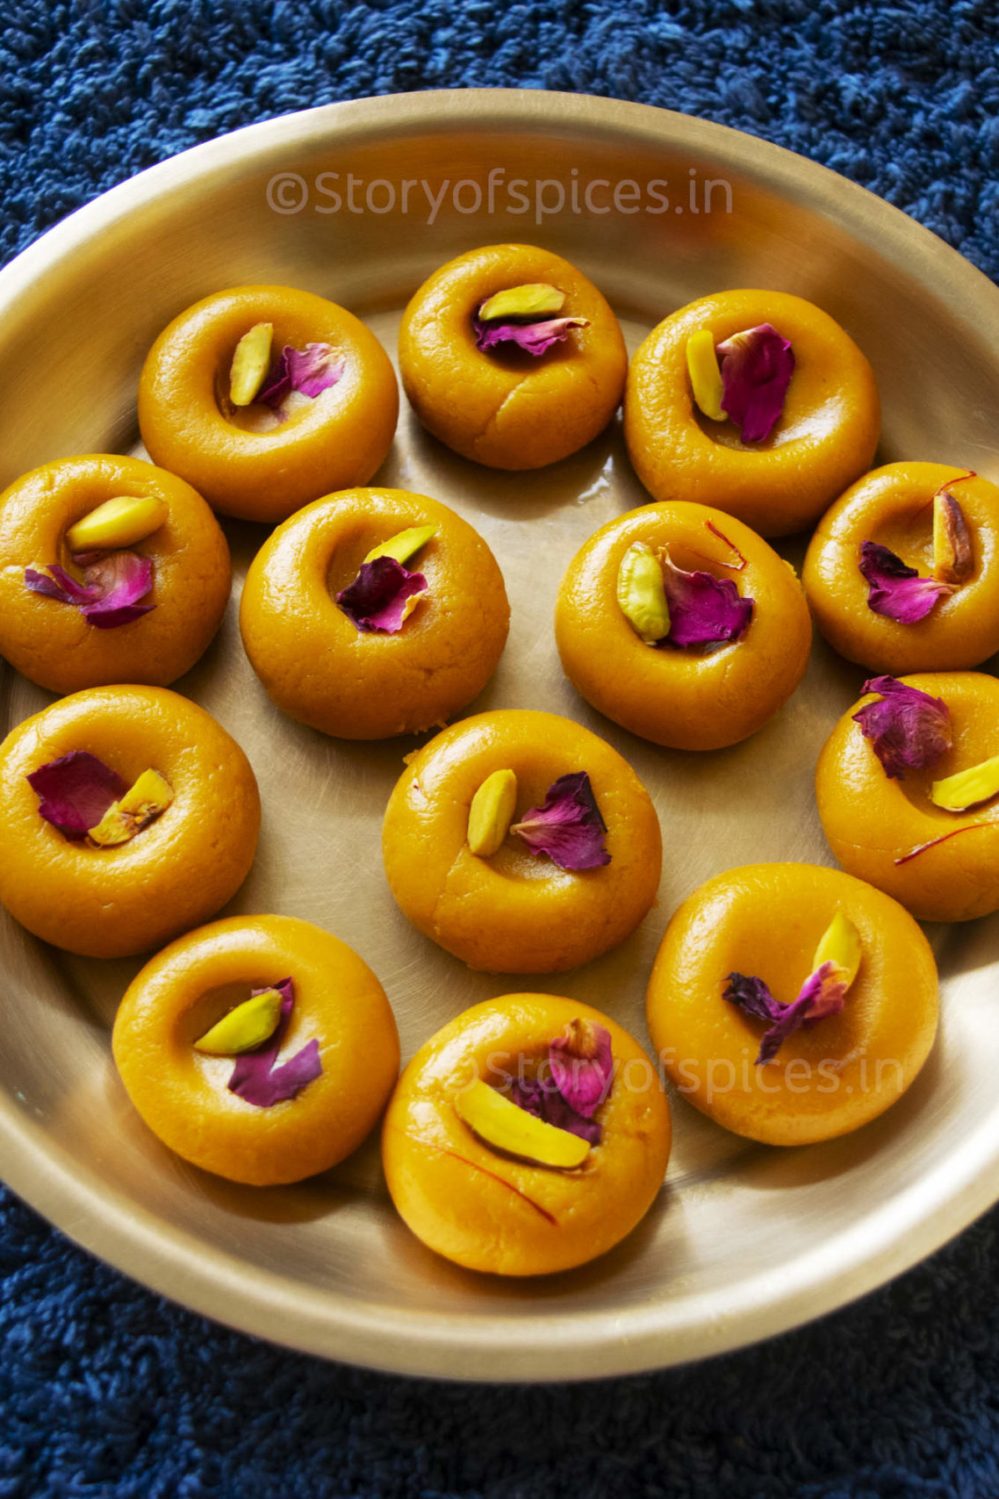 Mango-kesar-peda-story-of-spices .